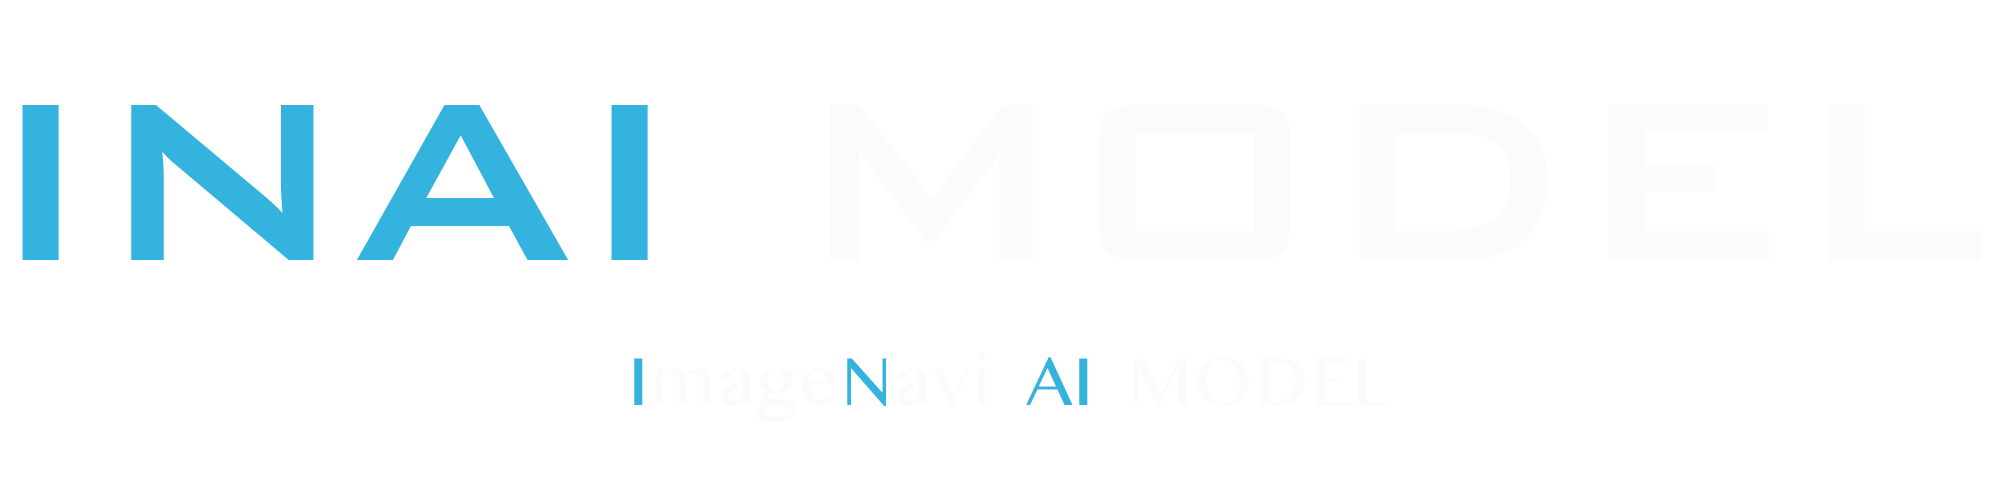 INAI MODEL~ImageNavi AI MODEL~